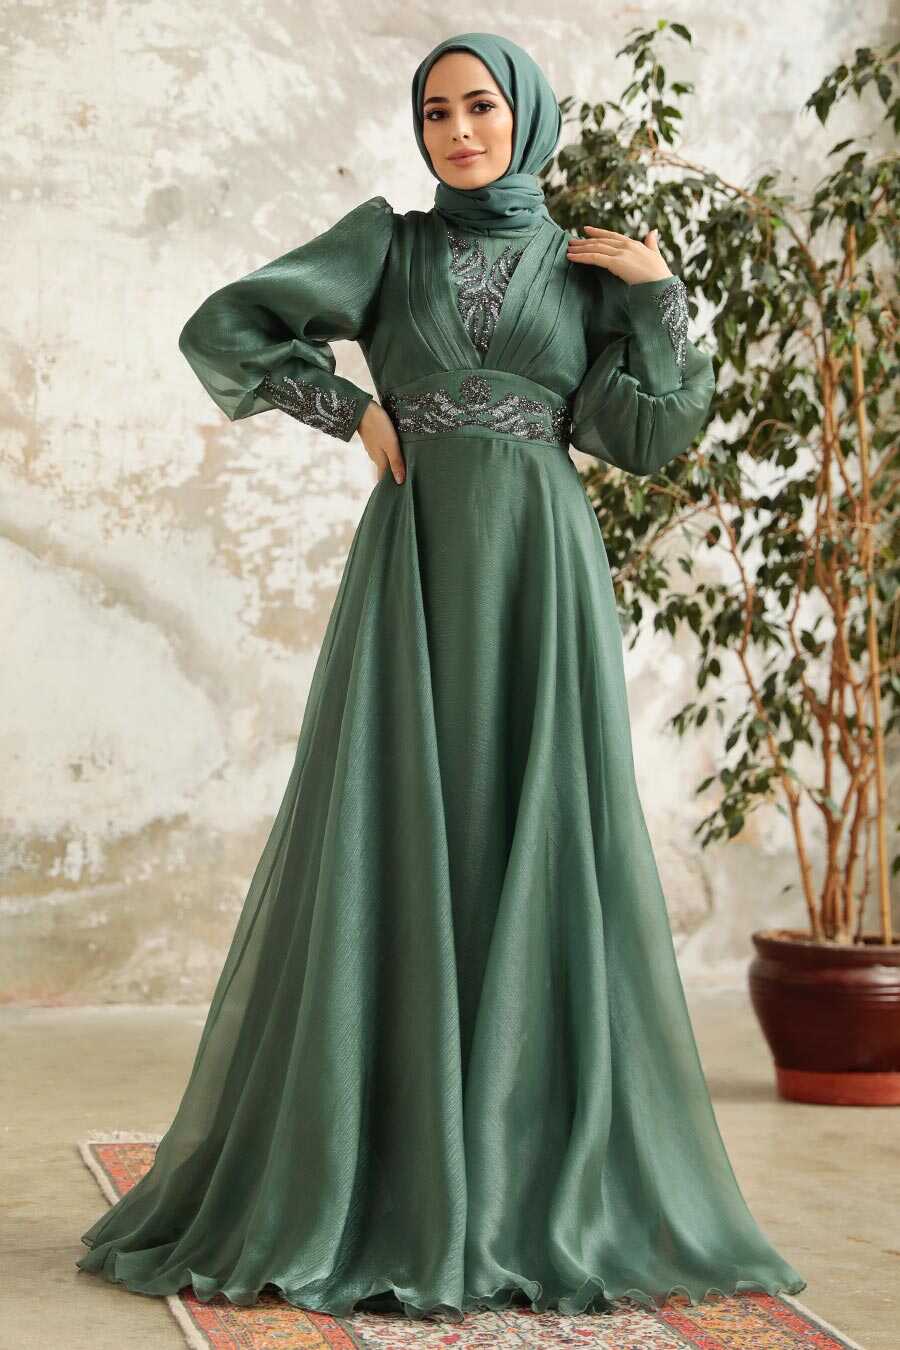 Neva Style - Stylish Almond Green Modest Islamic Clothing Prom Dress 3753CY